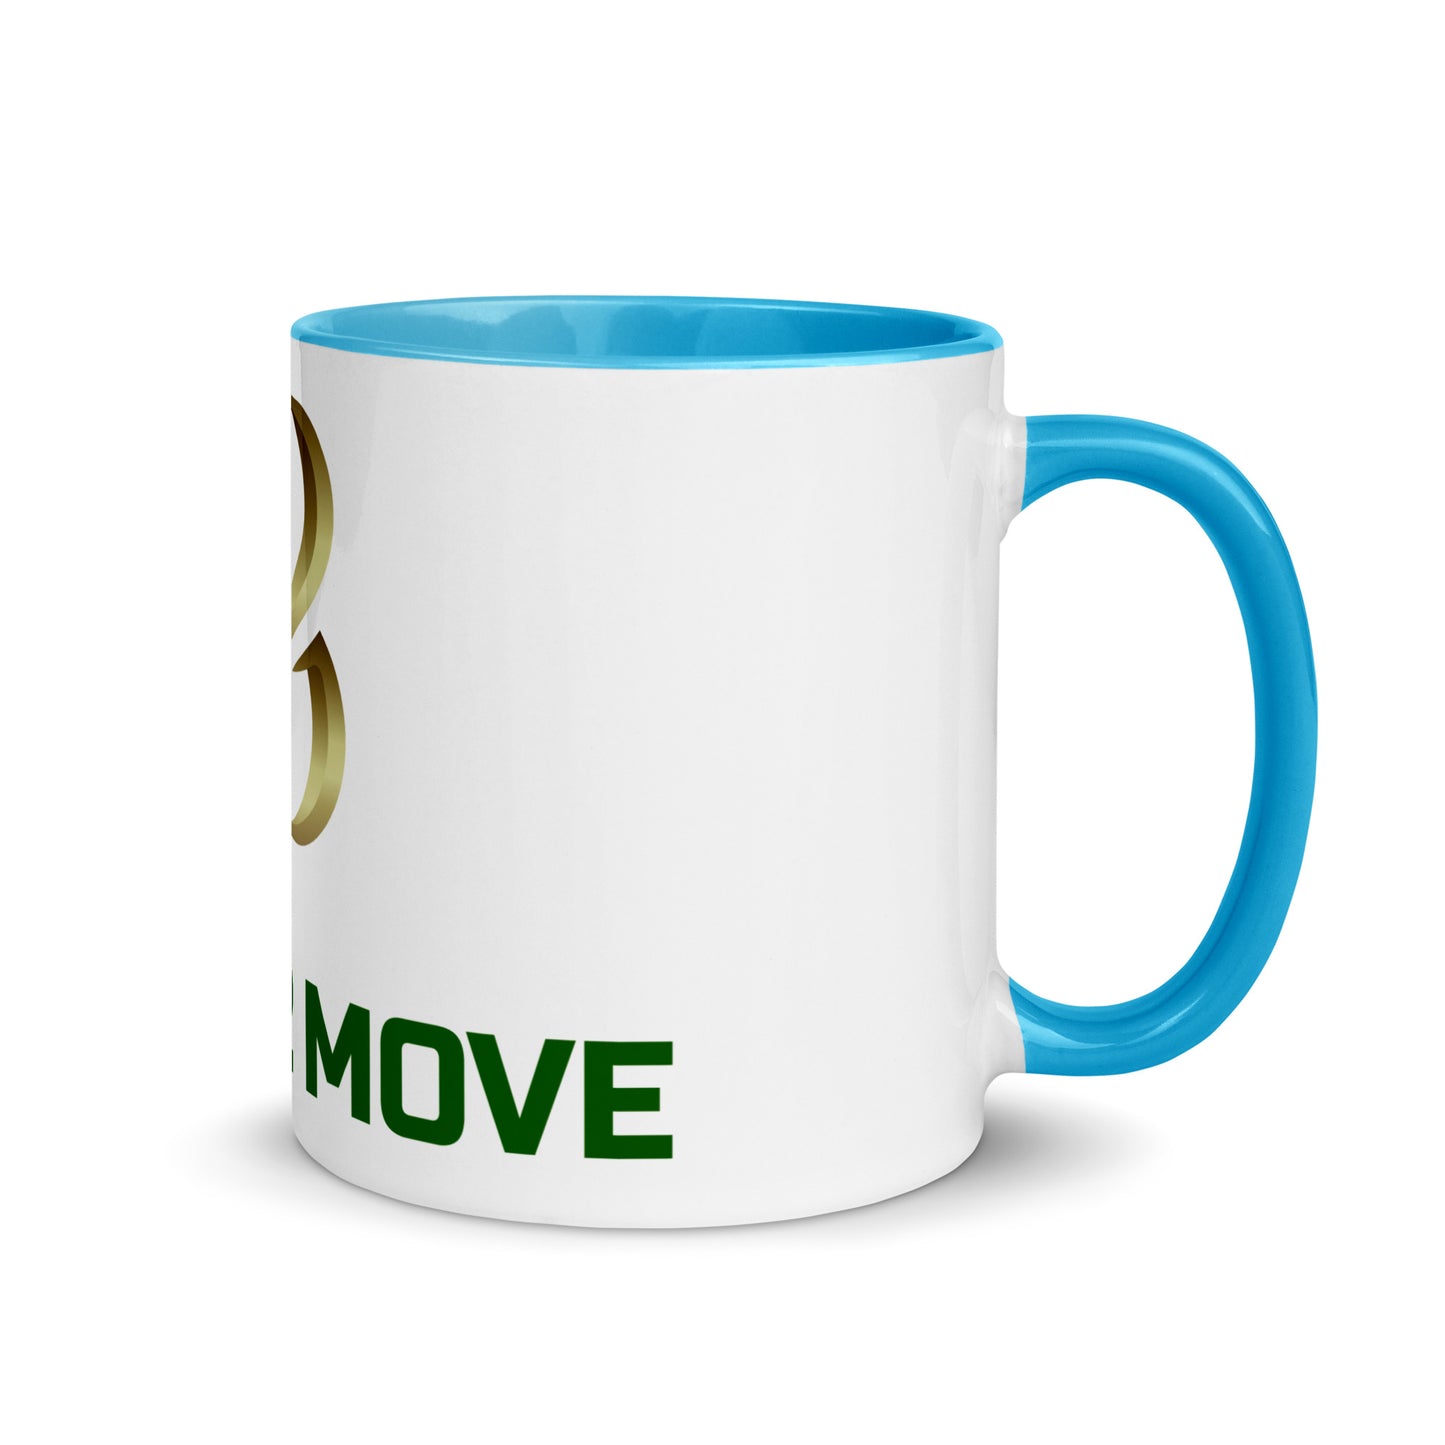 Gold Logo "Born 2 Move" Mug with Color Inside